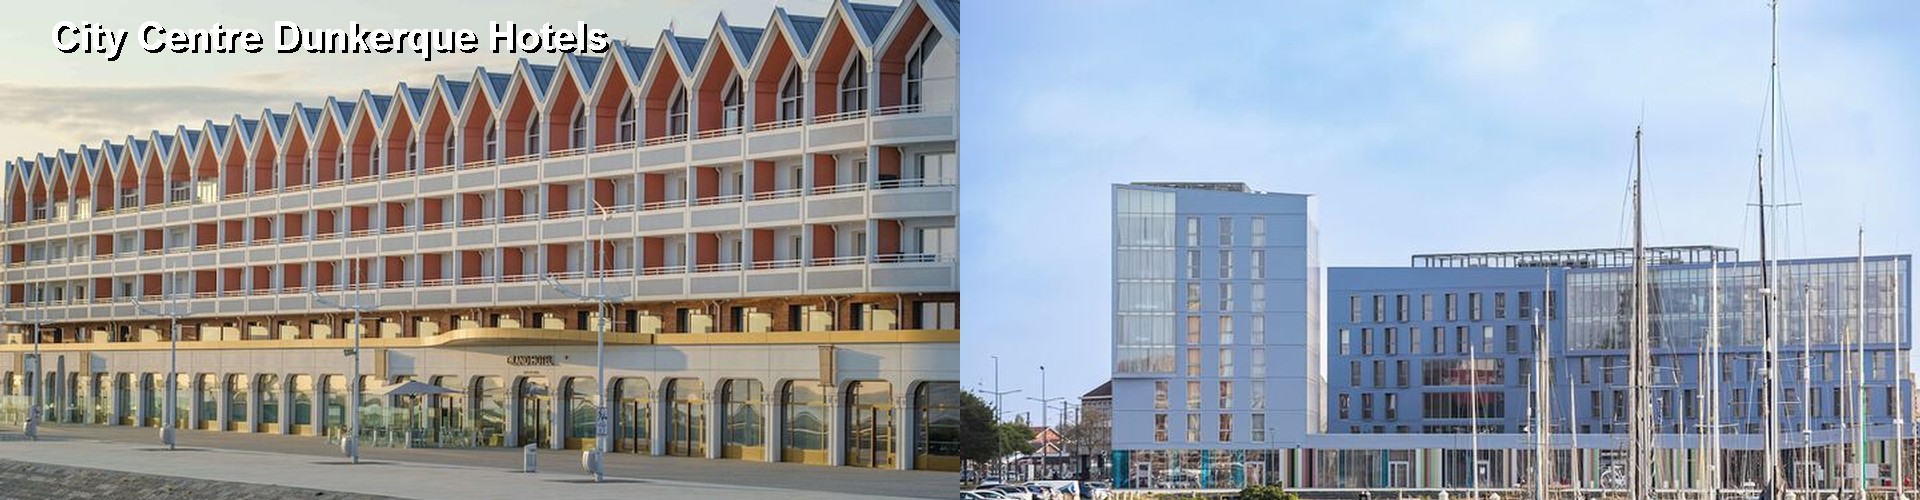 3 Best Hotels near City Centre Dunkerque